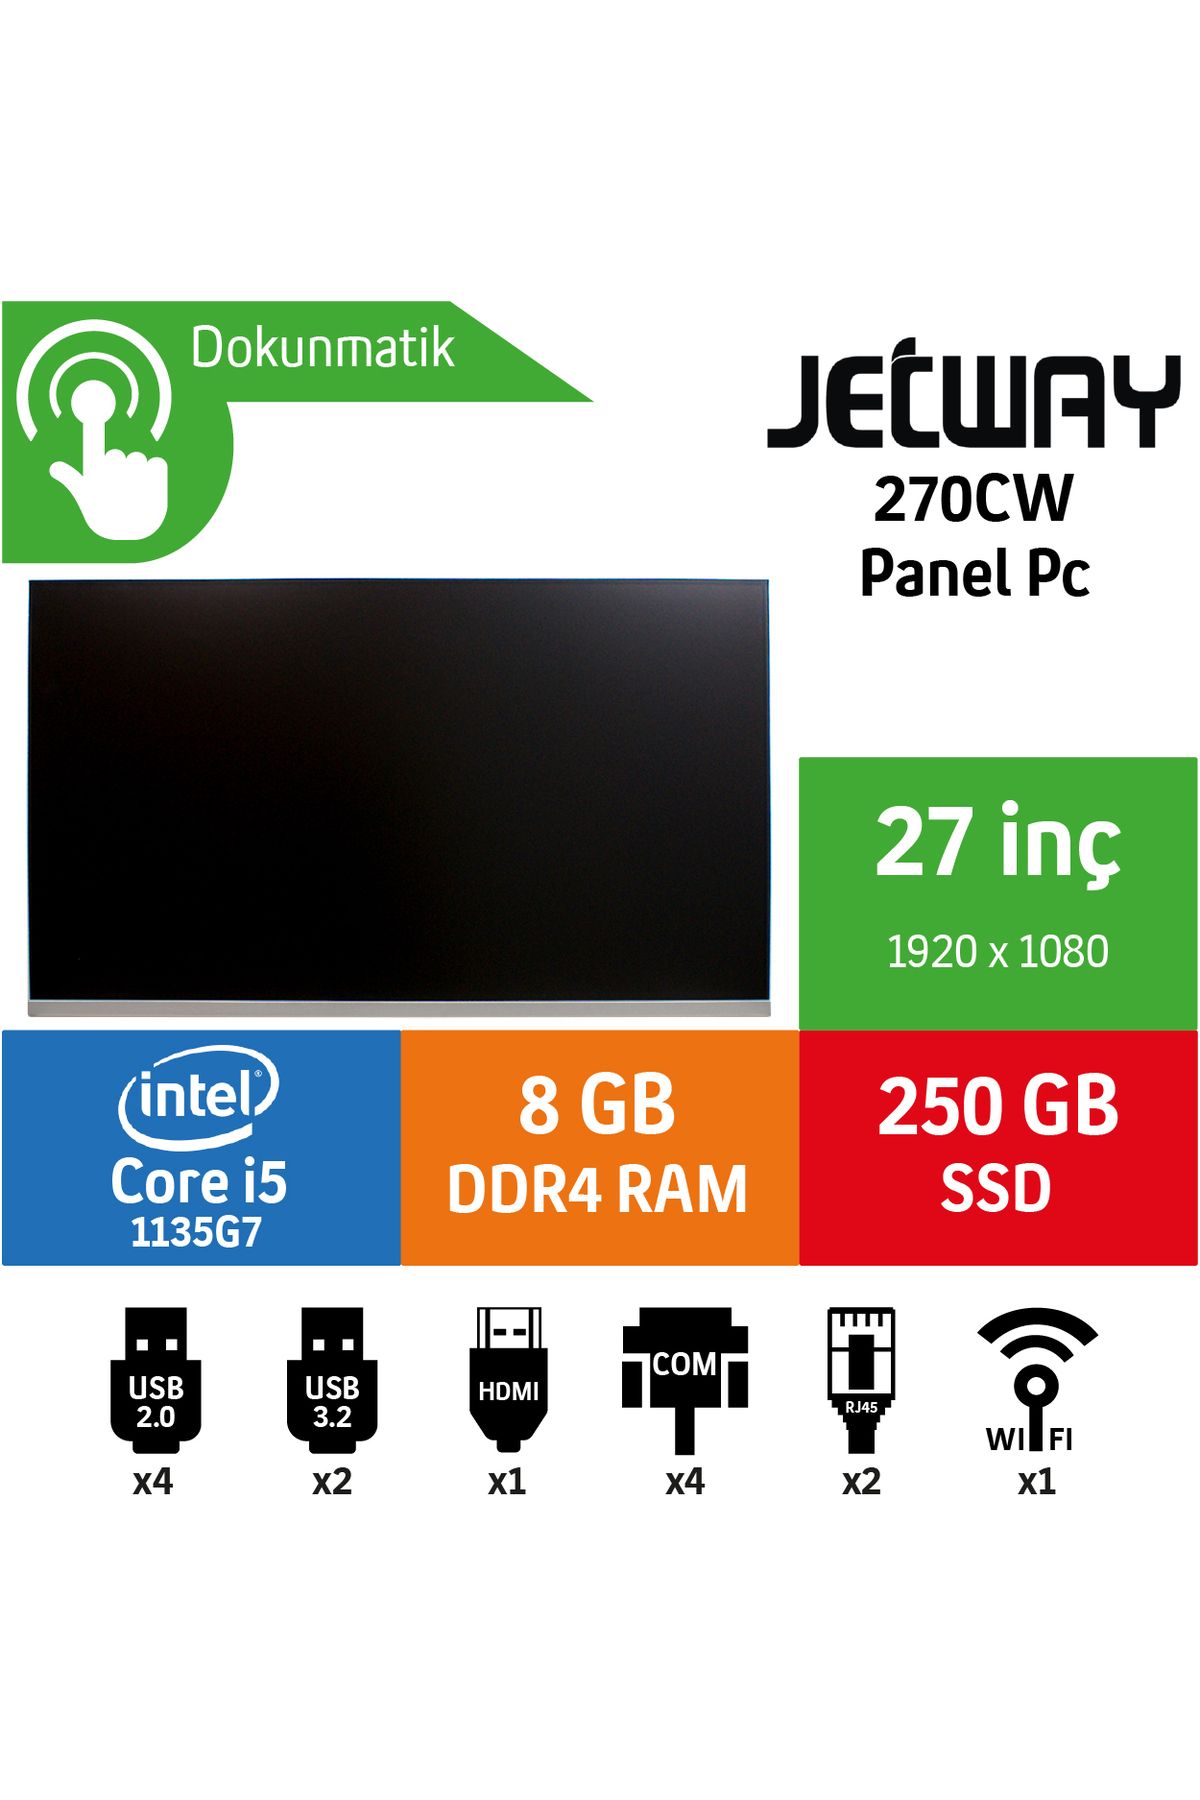 Jetway 270cw Intel Core I5 1135g7 8gb 256gb Ssd Freedos 27" Endüstriyel Panel Pc